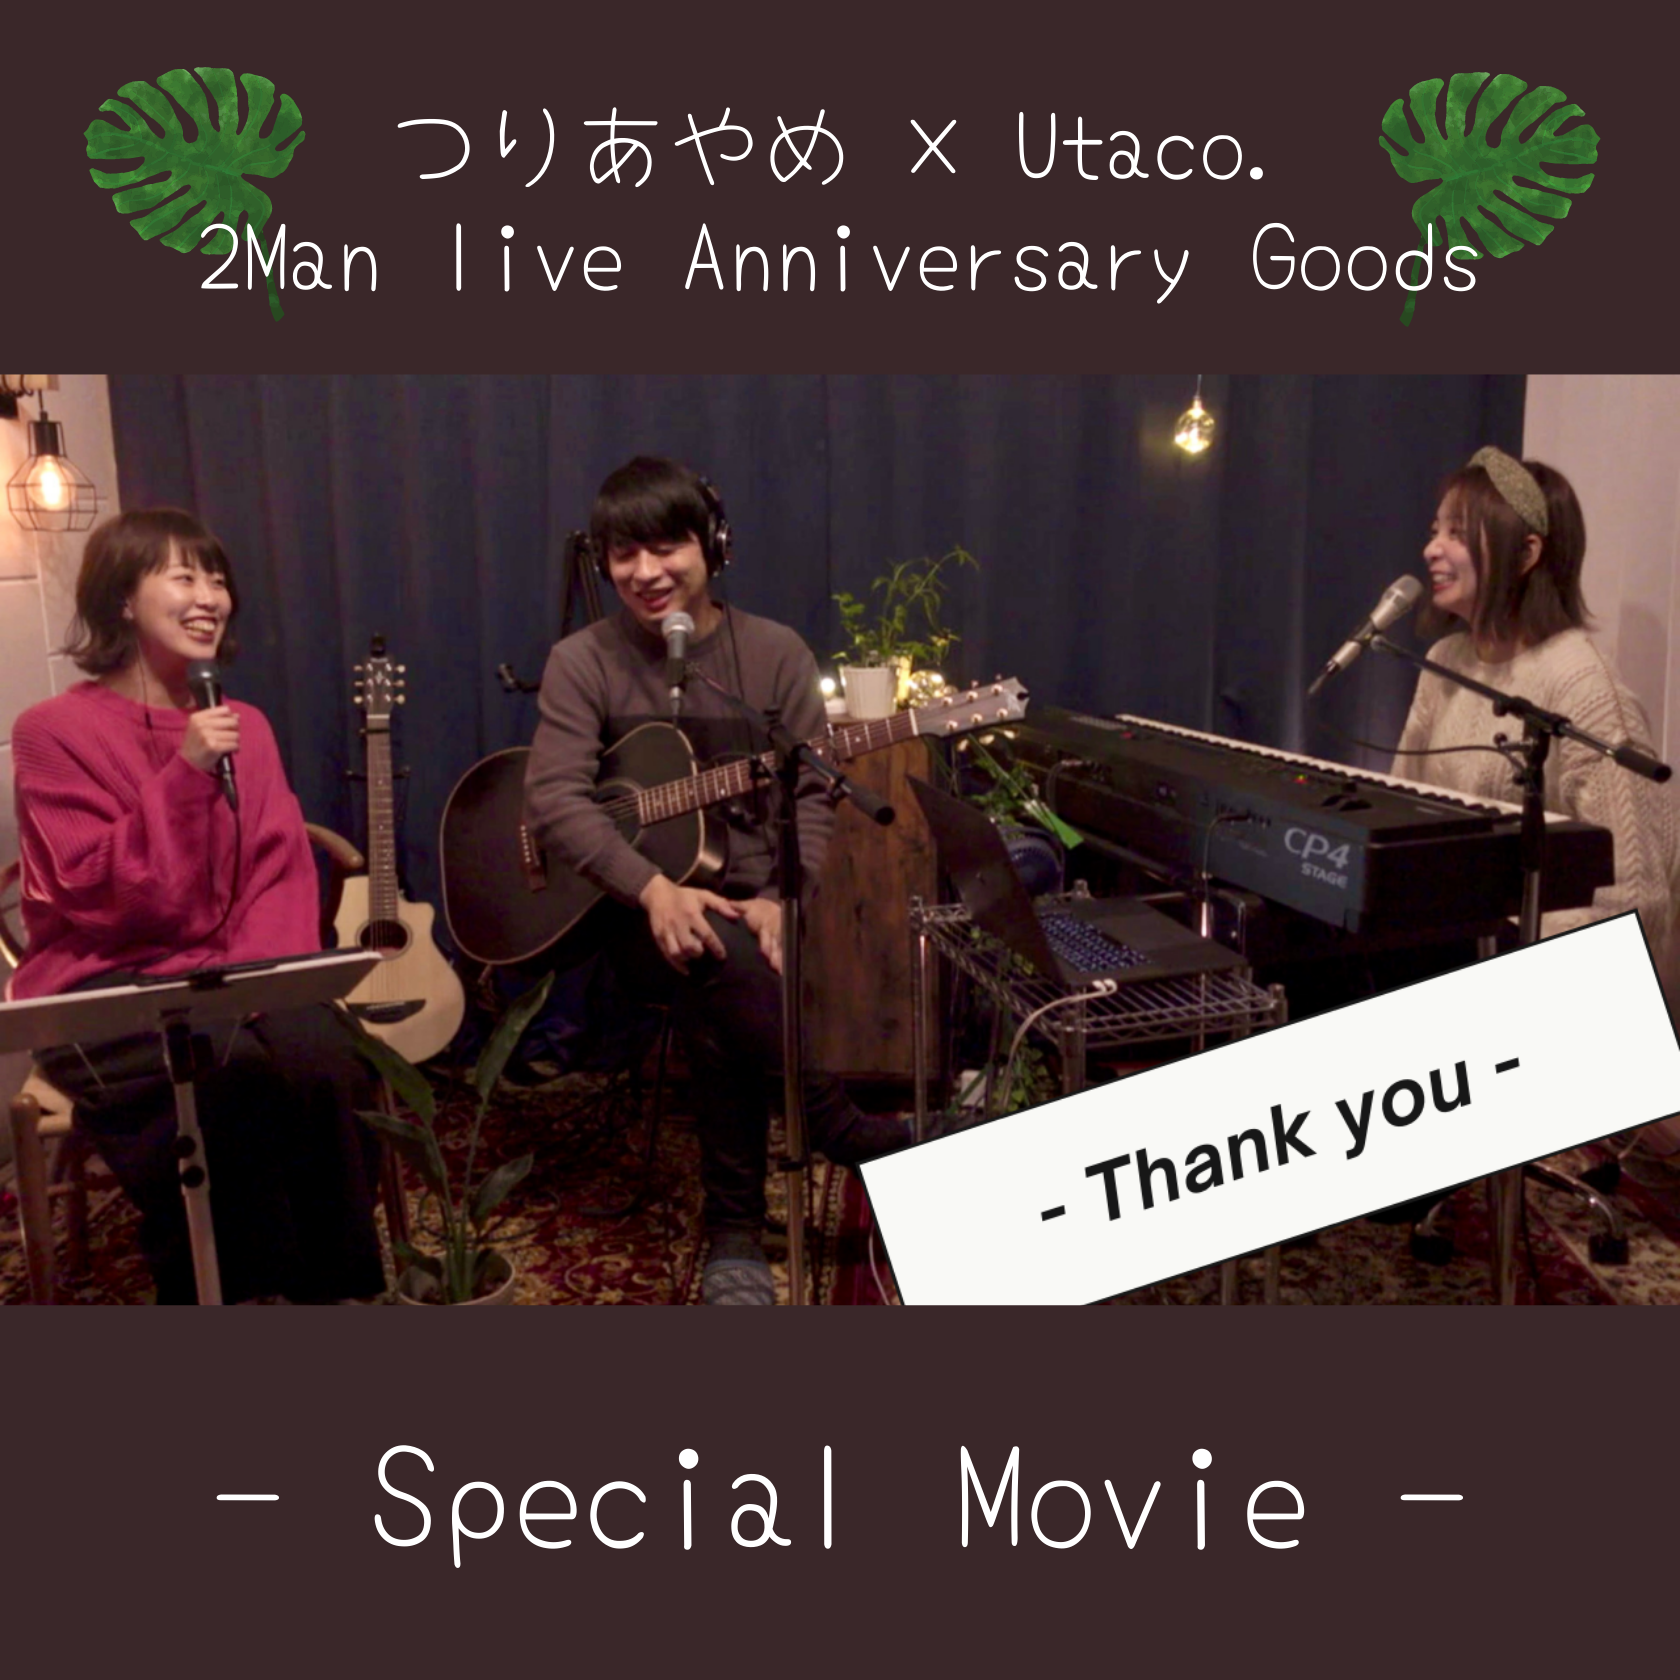 【Special Movie】つりあやめ × Utaco. 2man live Anniversary Goods